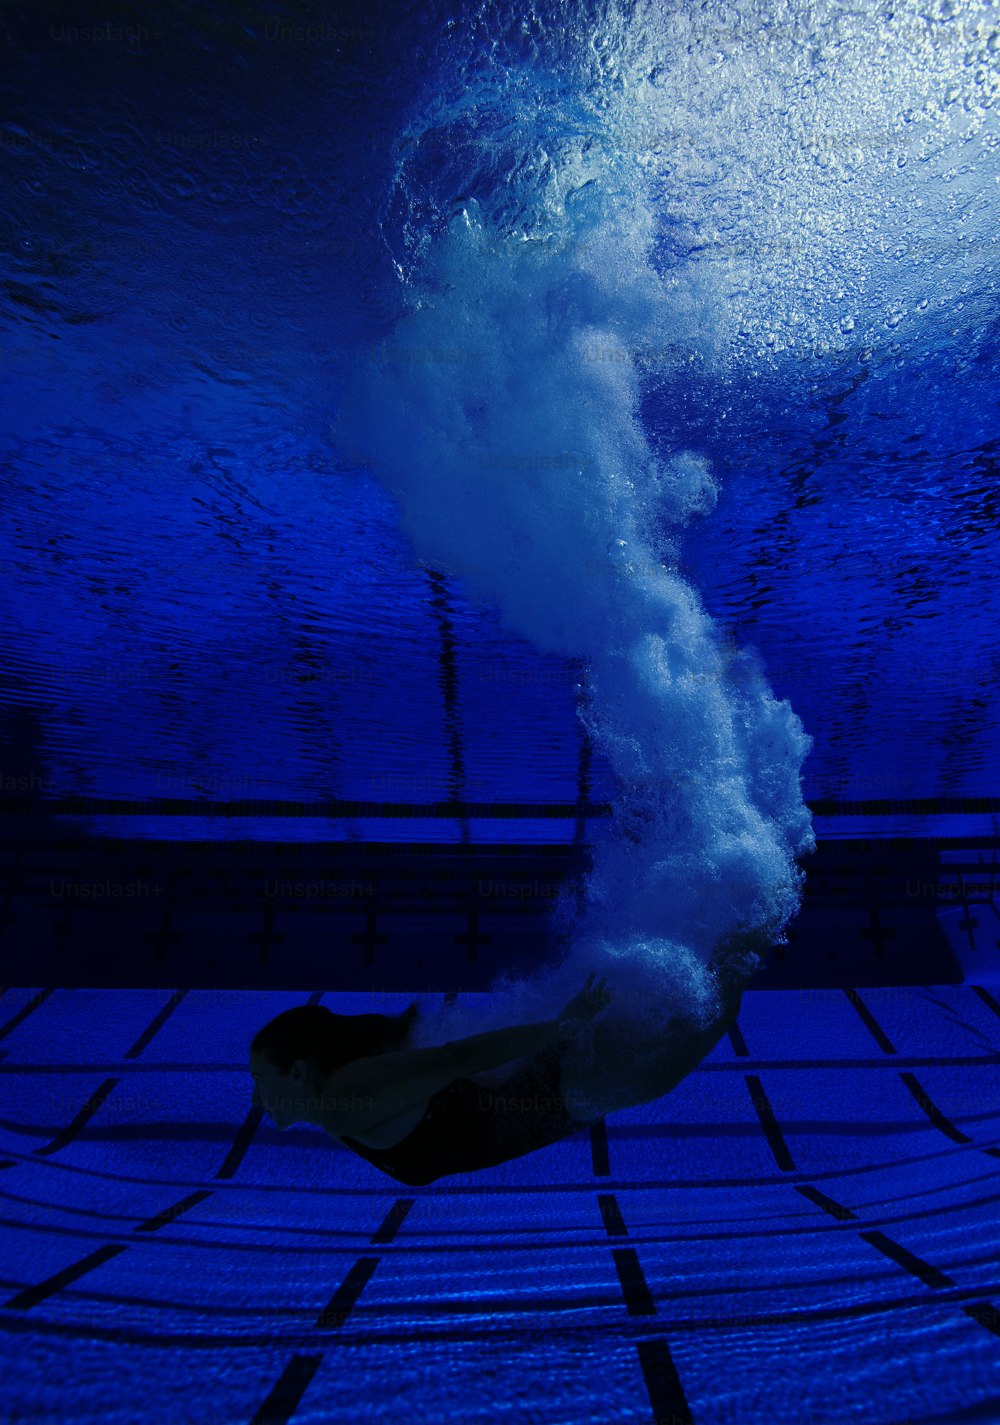 Underwater view of diver entering water